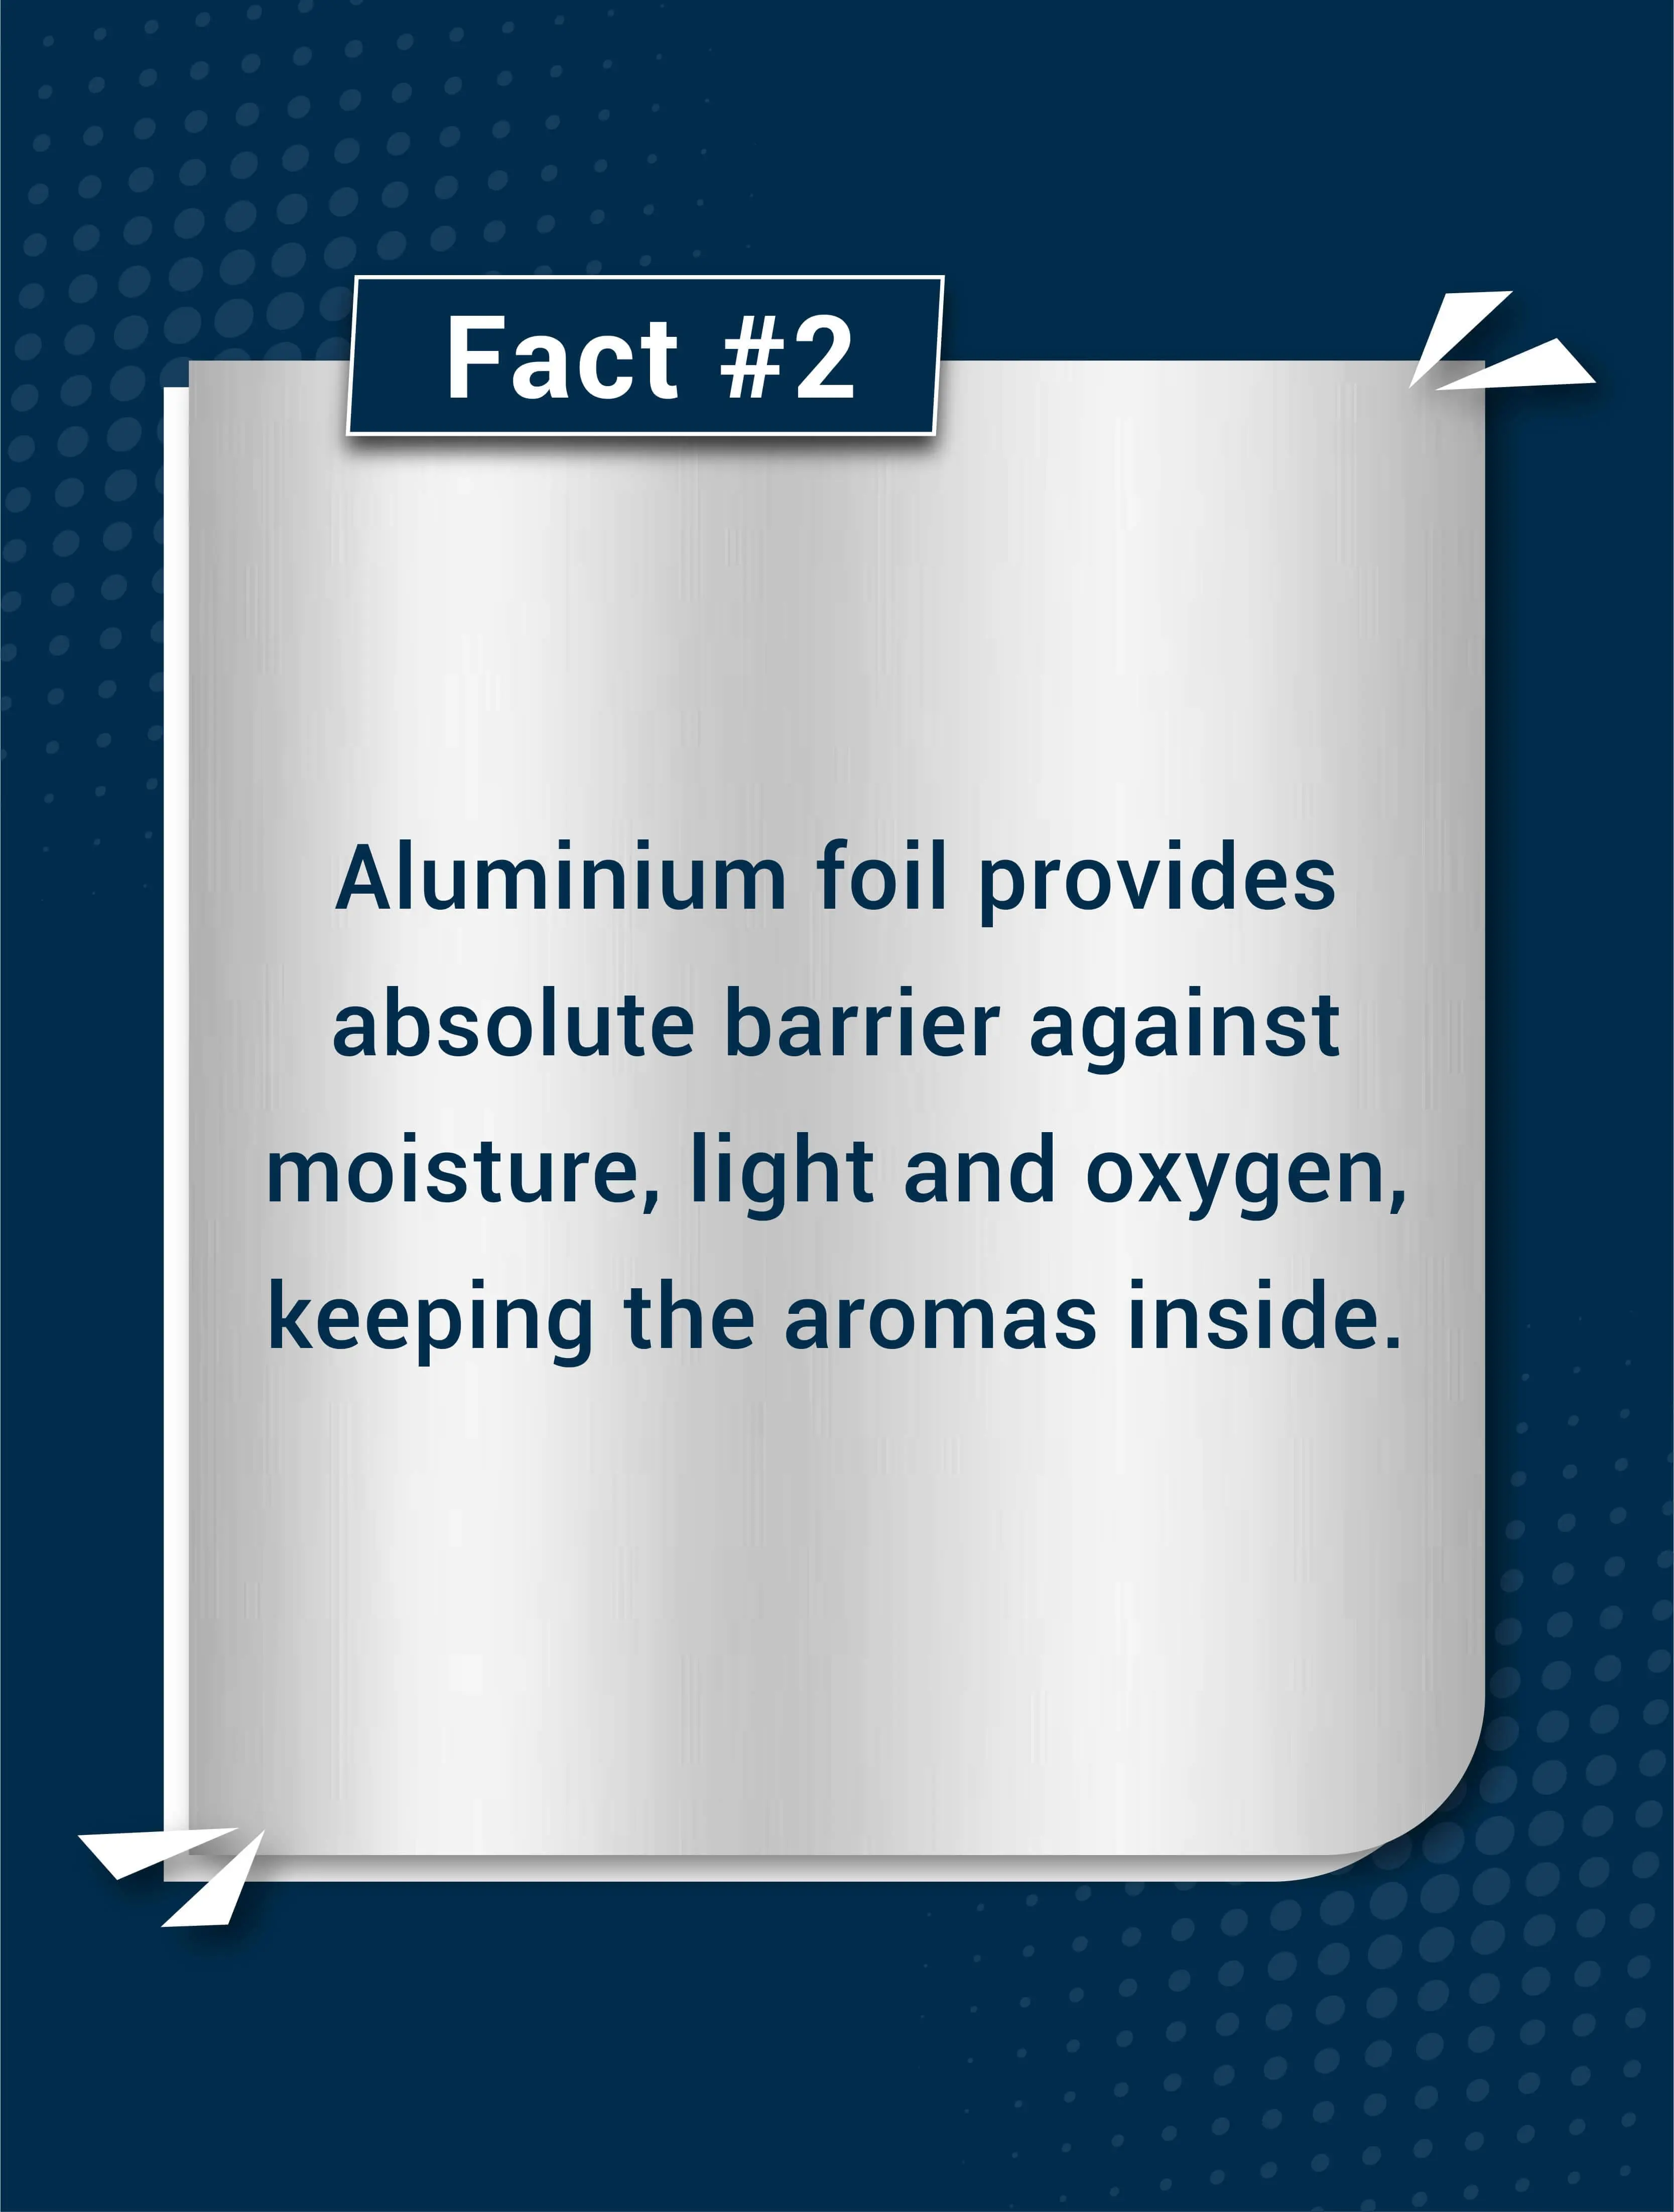 fun facts about aluminium foil